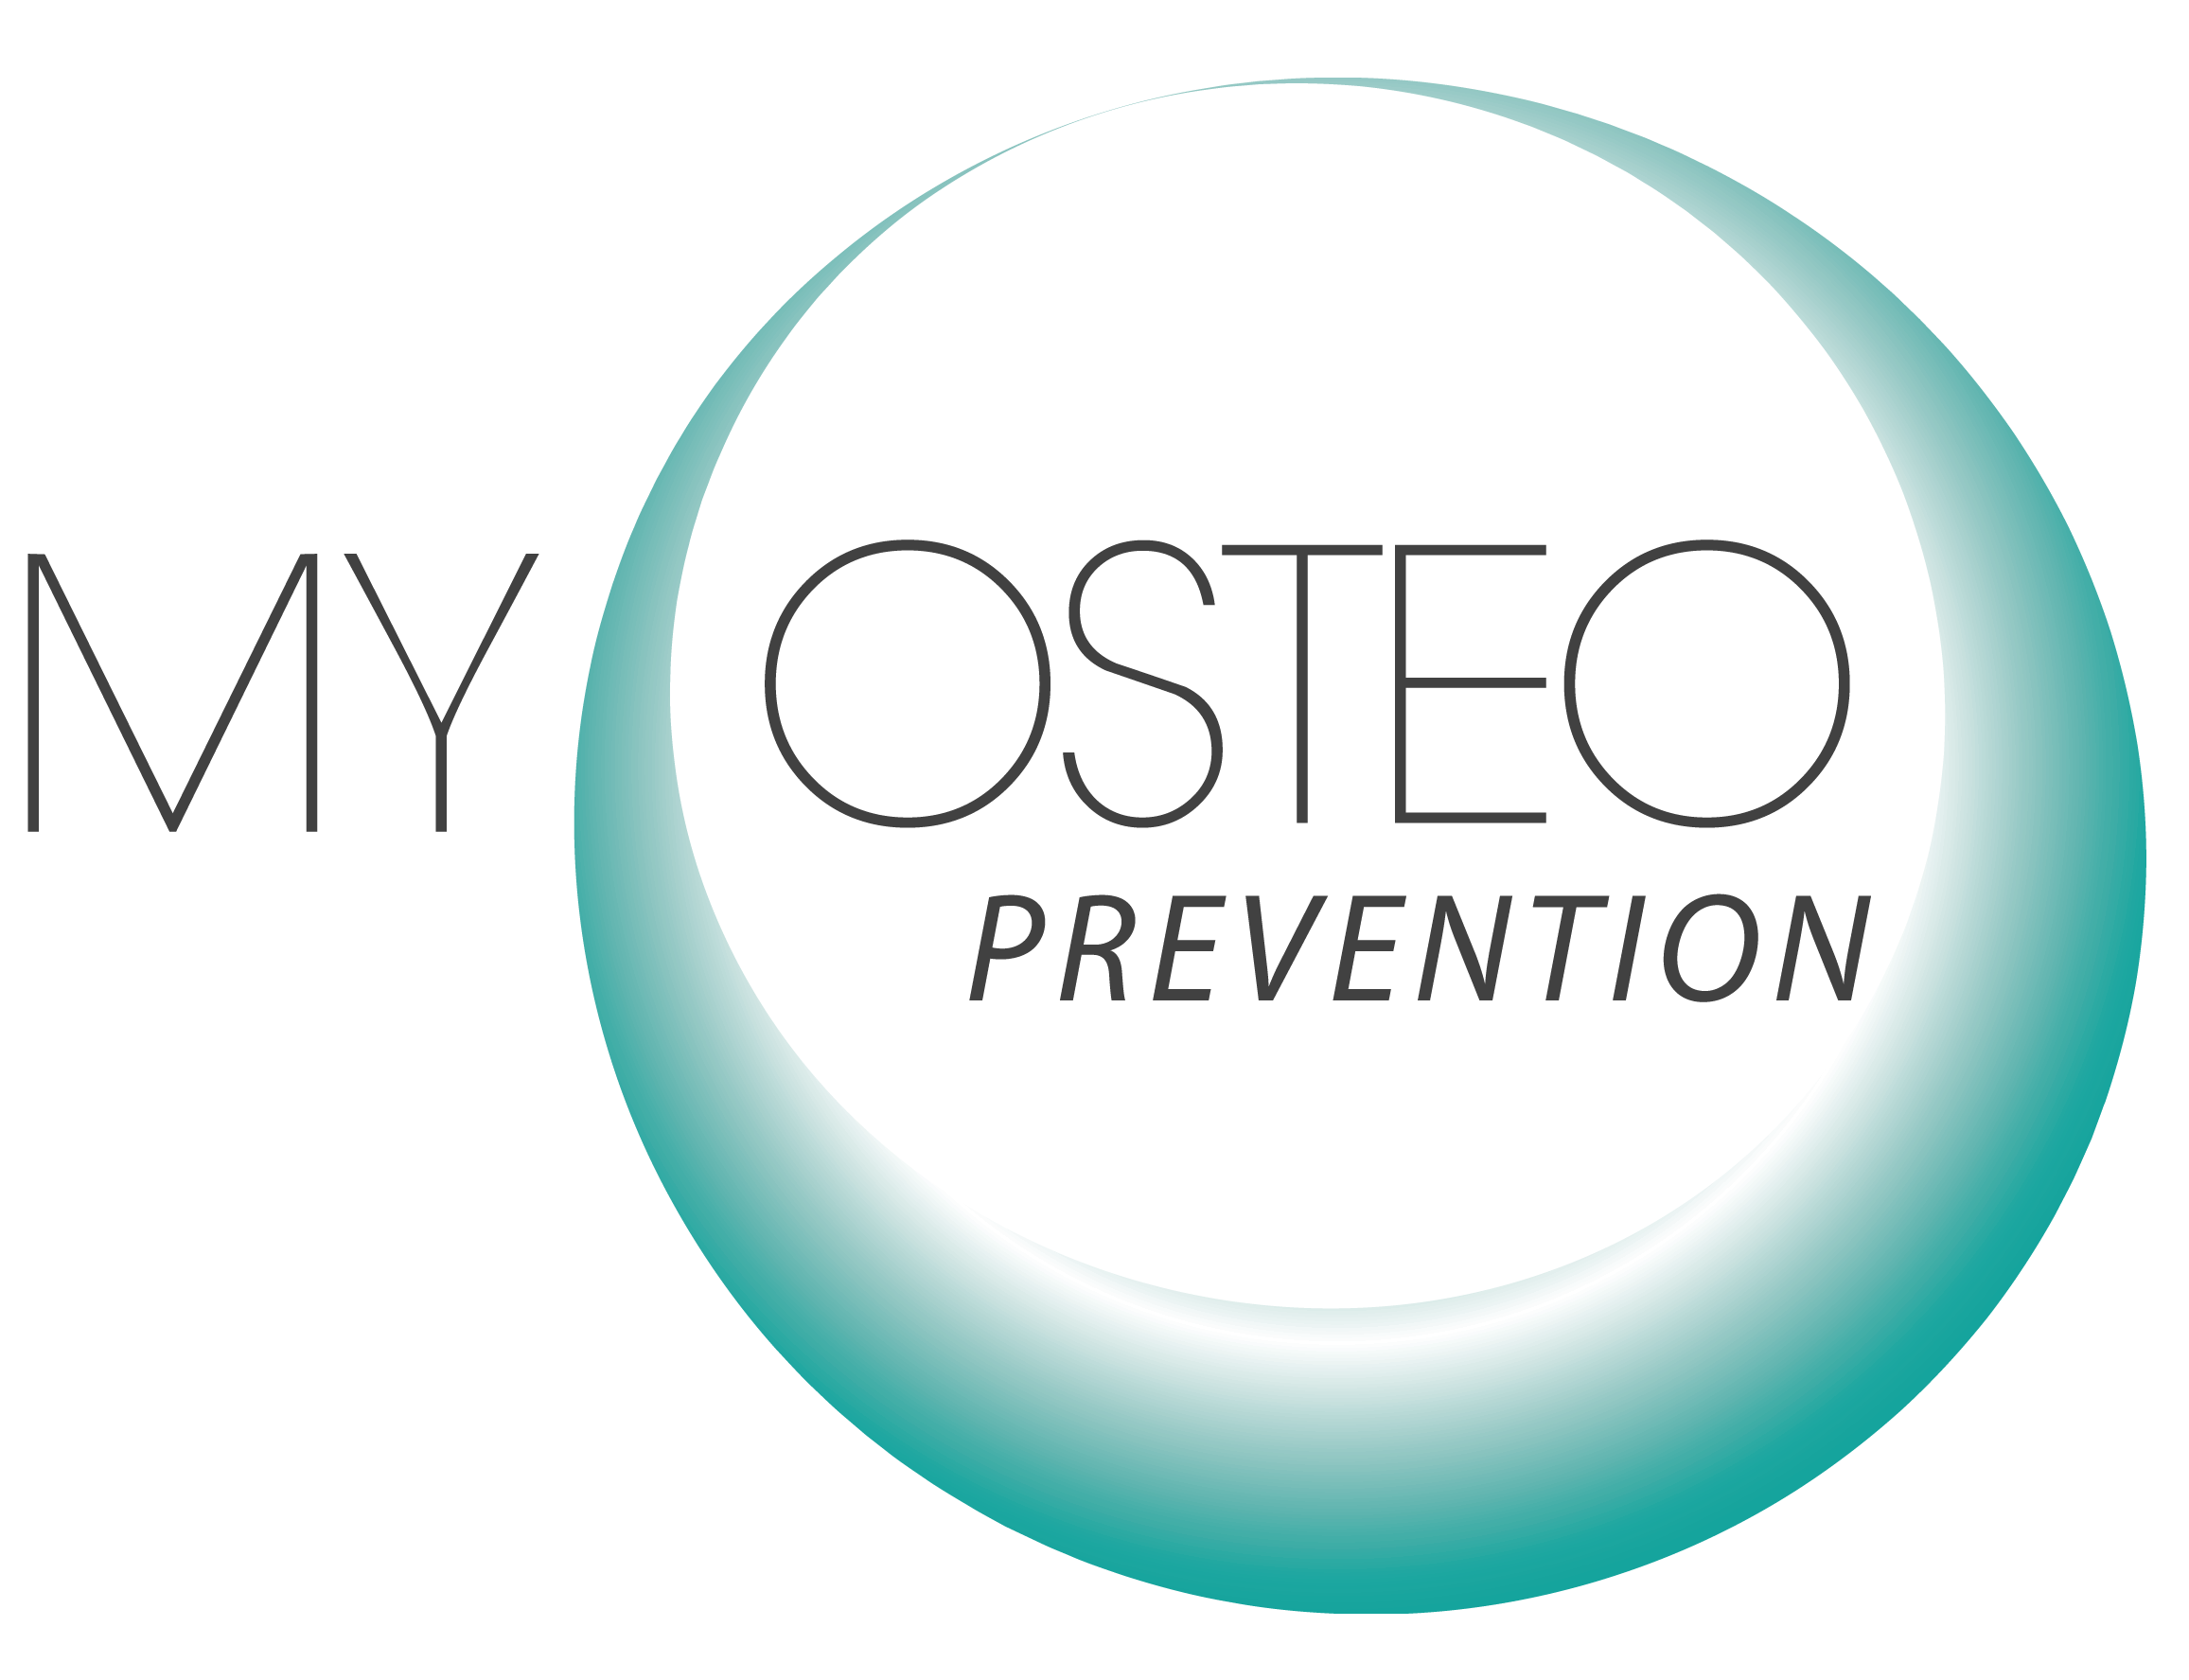 My Osteo Prevention